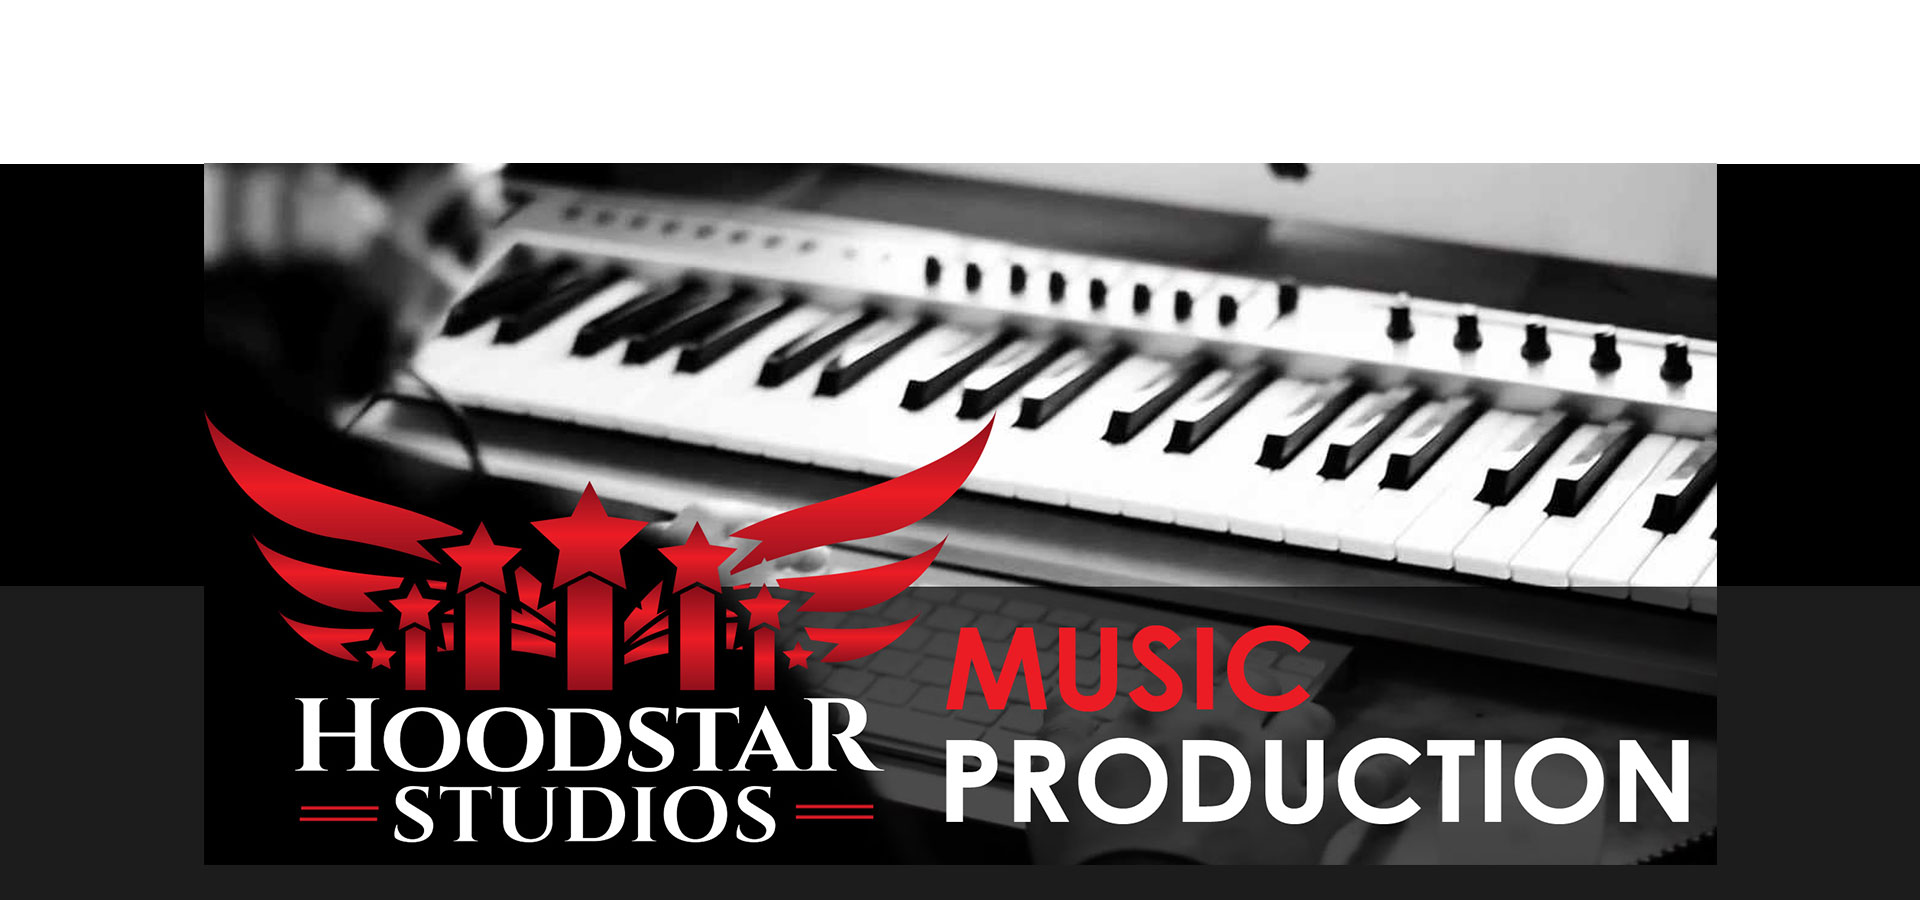 Hoodstar-Studios-Music-Production3